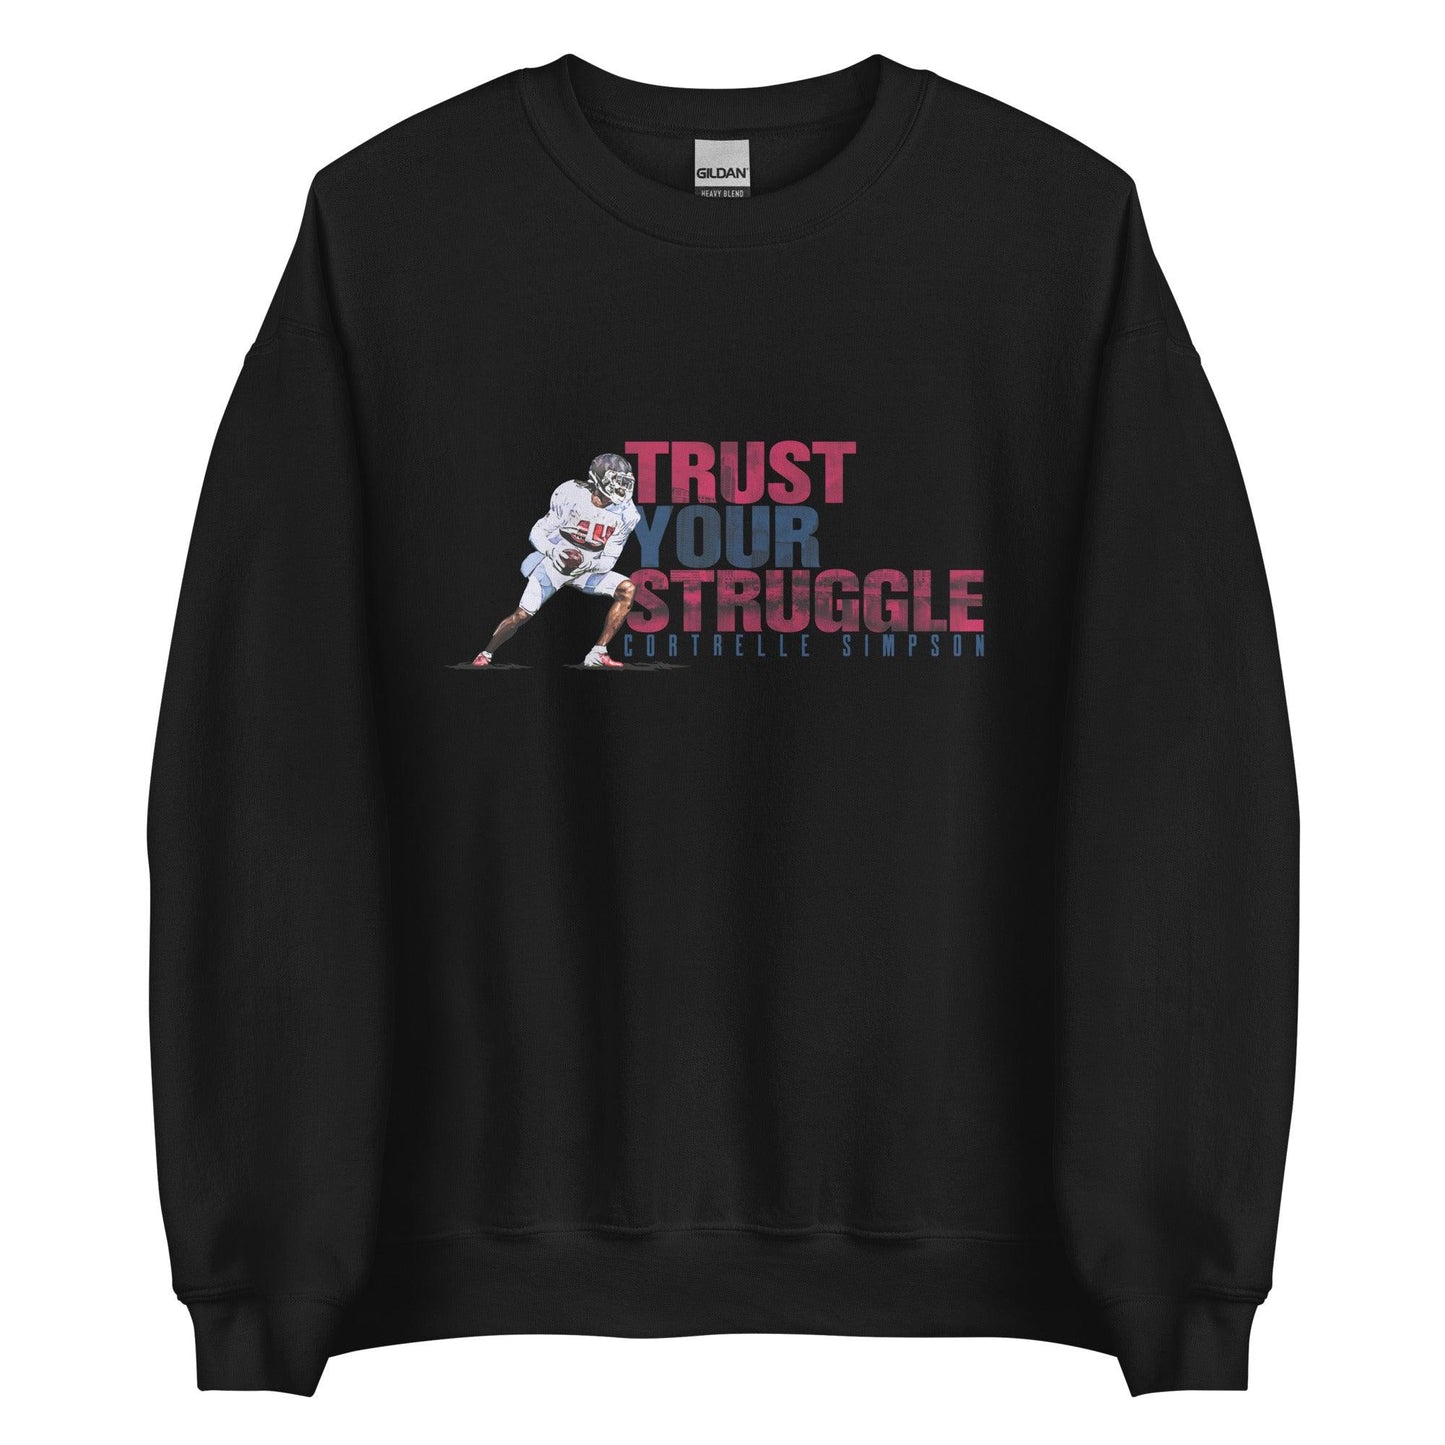 Cortrelle Simpson "Trust Your Struggle" Sweatshirt - Fan Arch